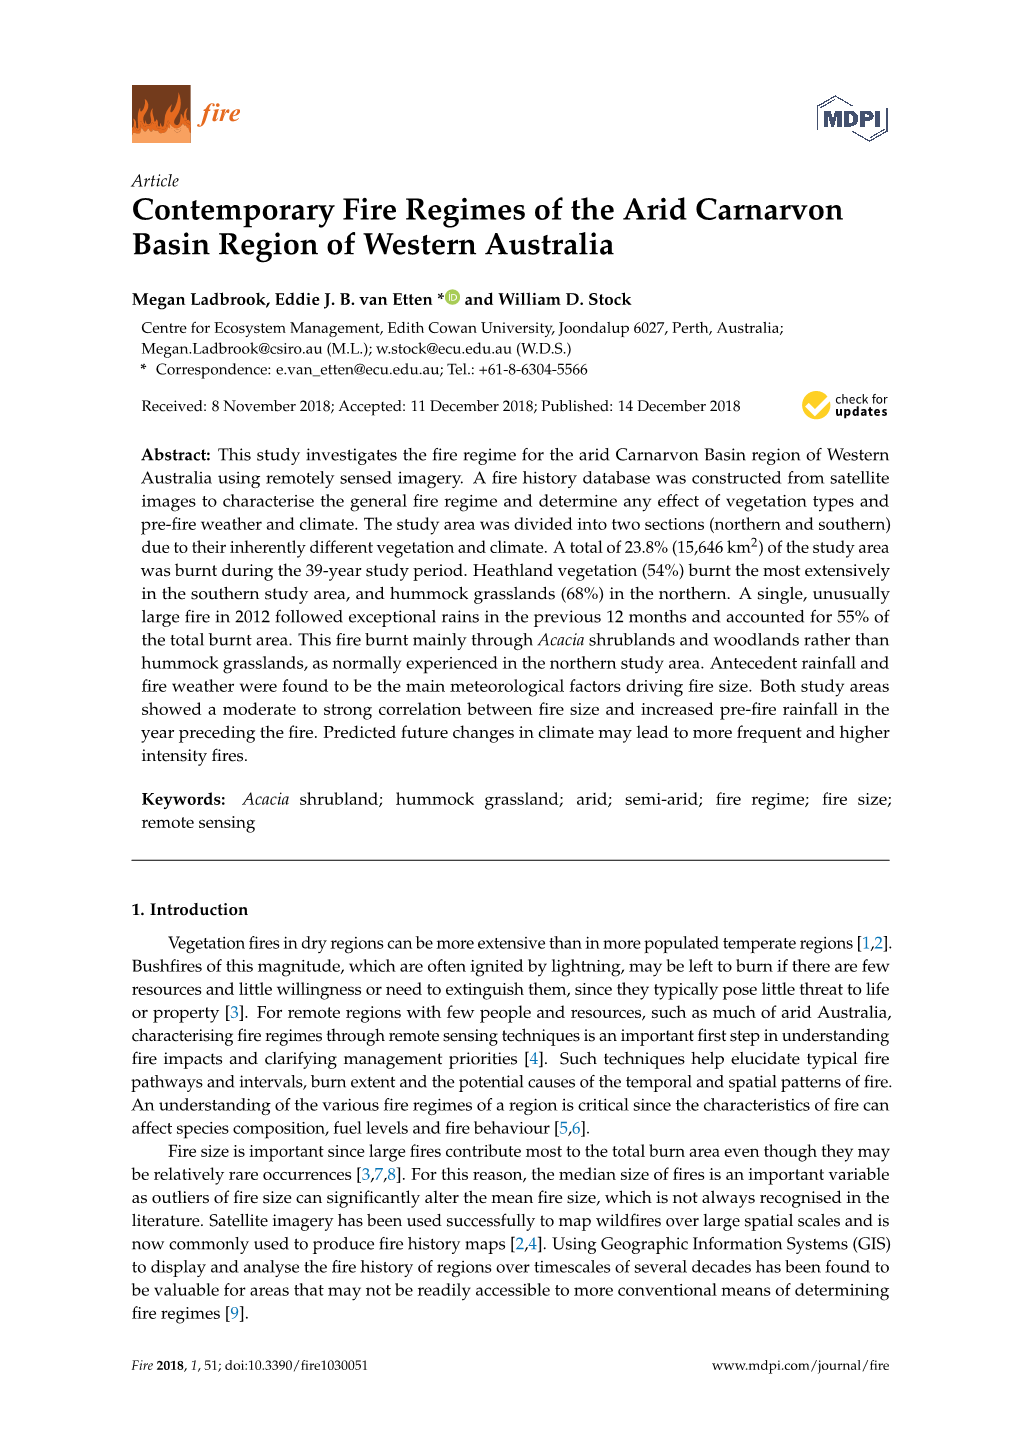 Contemporary Fire Regimes of the Arid Carnarvon Basin Region of Western Australia